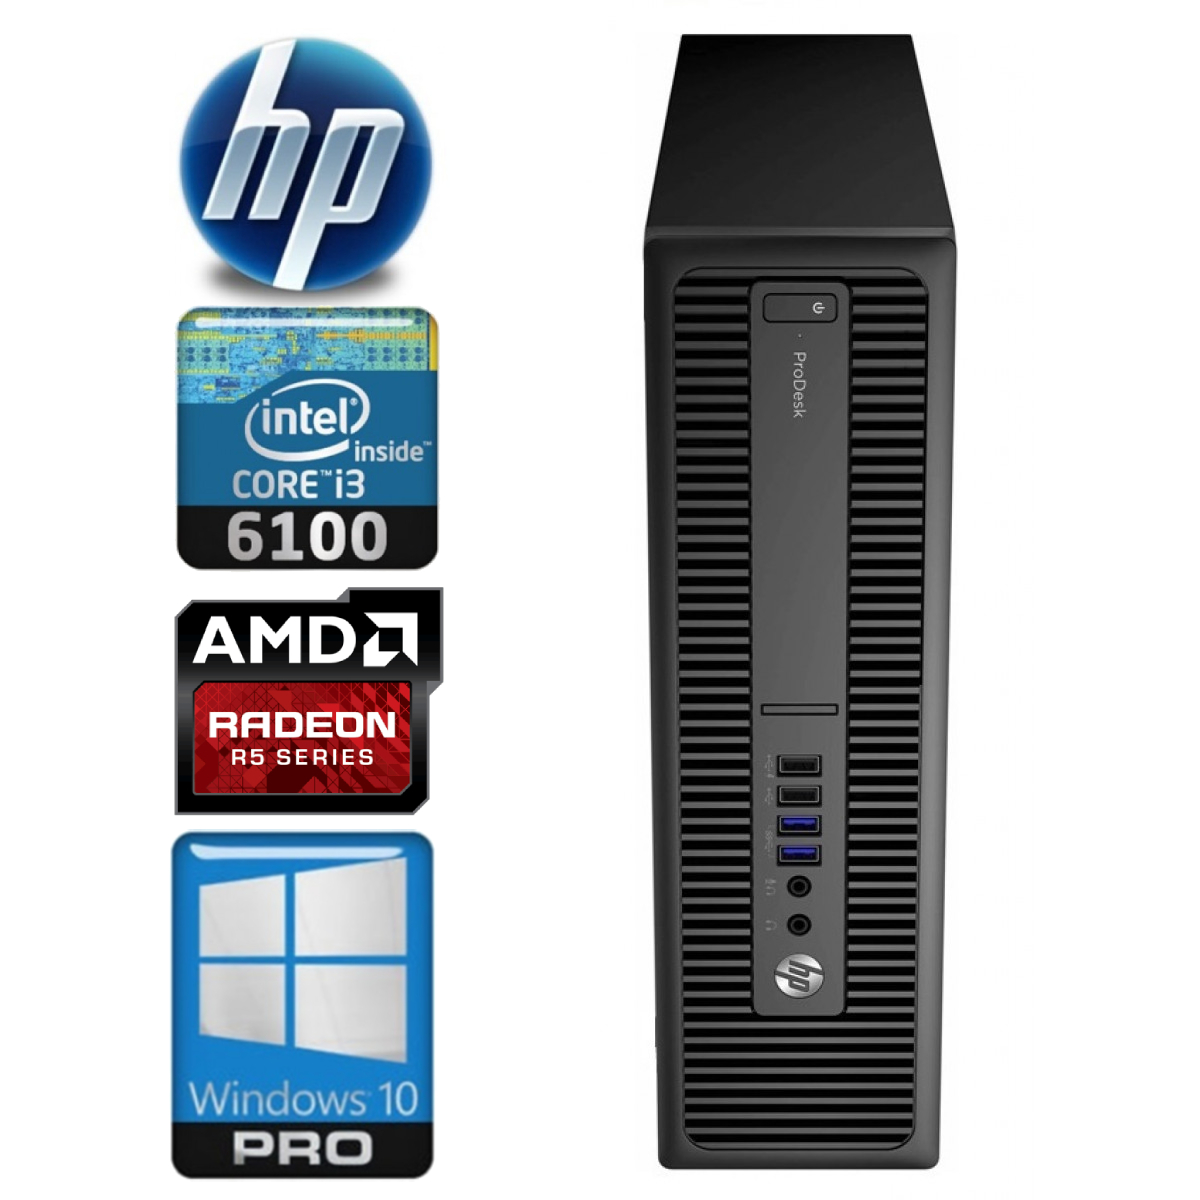 HP 600 G2 SFF i3-6100 16GB 128SSD+1TB R5-340 2GB WIN10Pro RW35775 (EAN411535775)